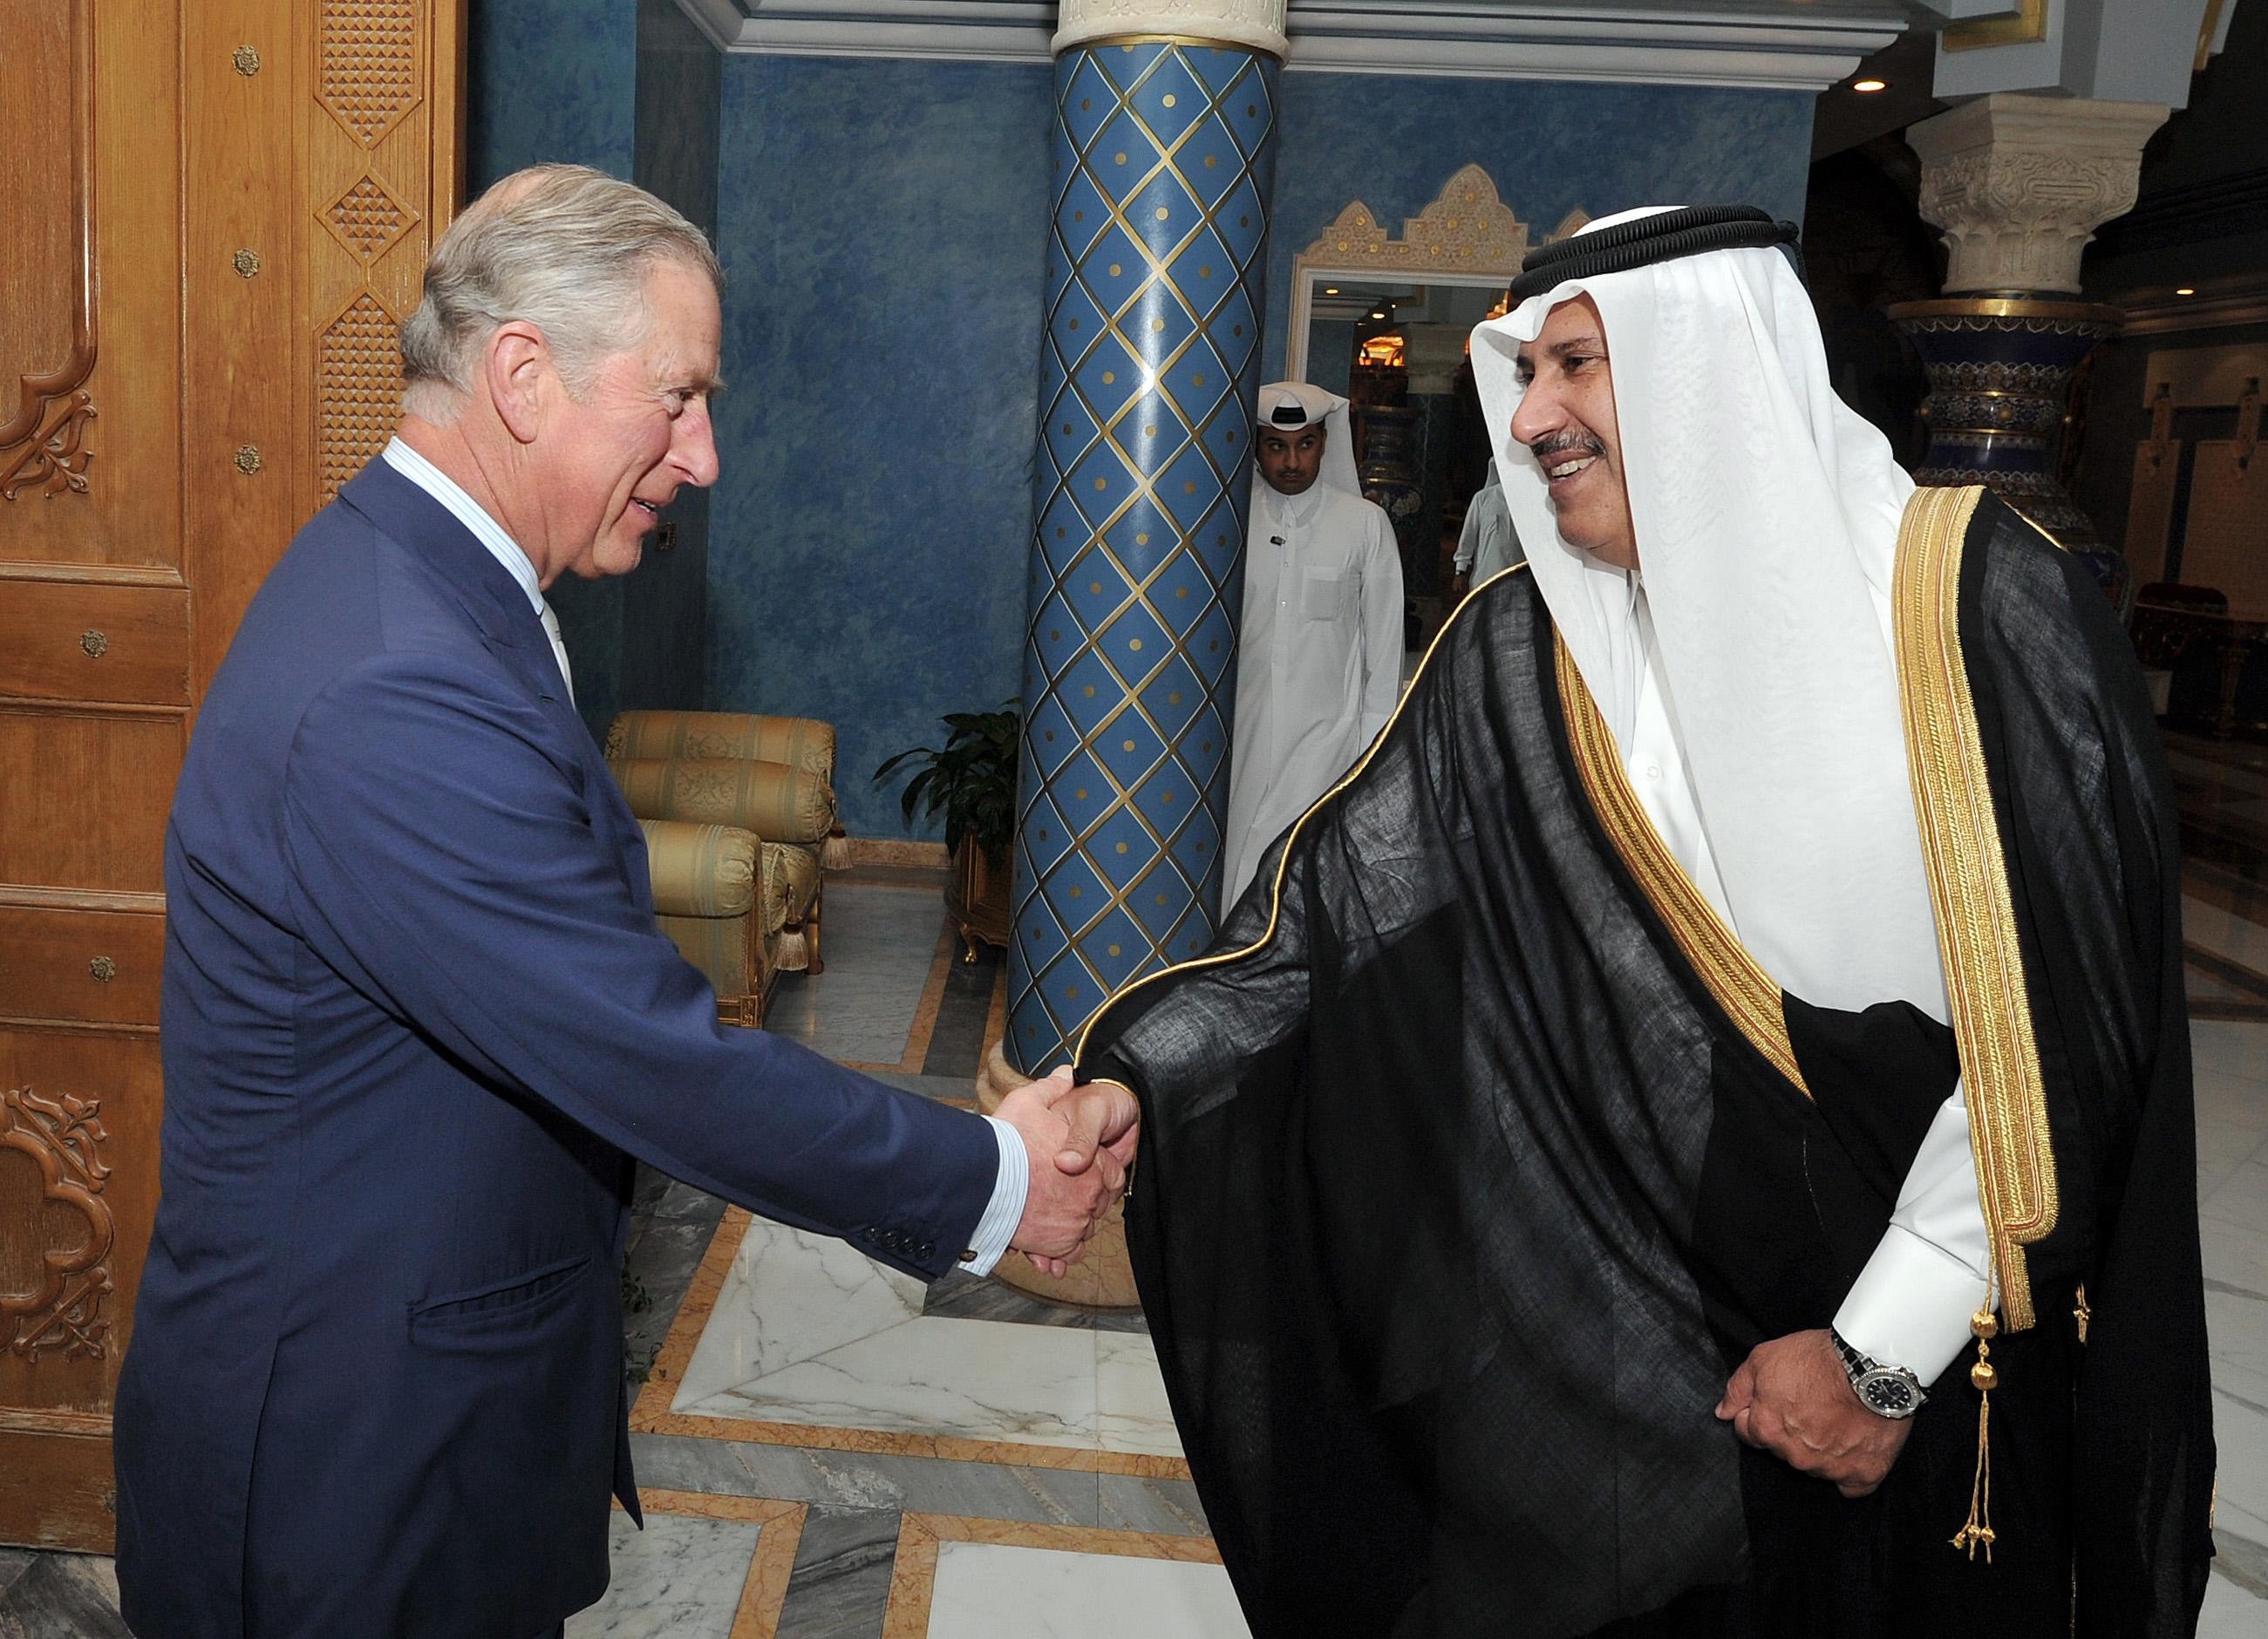 Prince Charles meets Sheikh Hamad bin Jassim